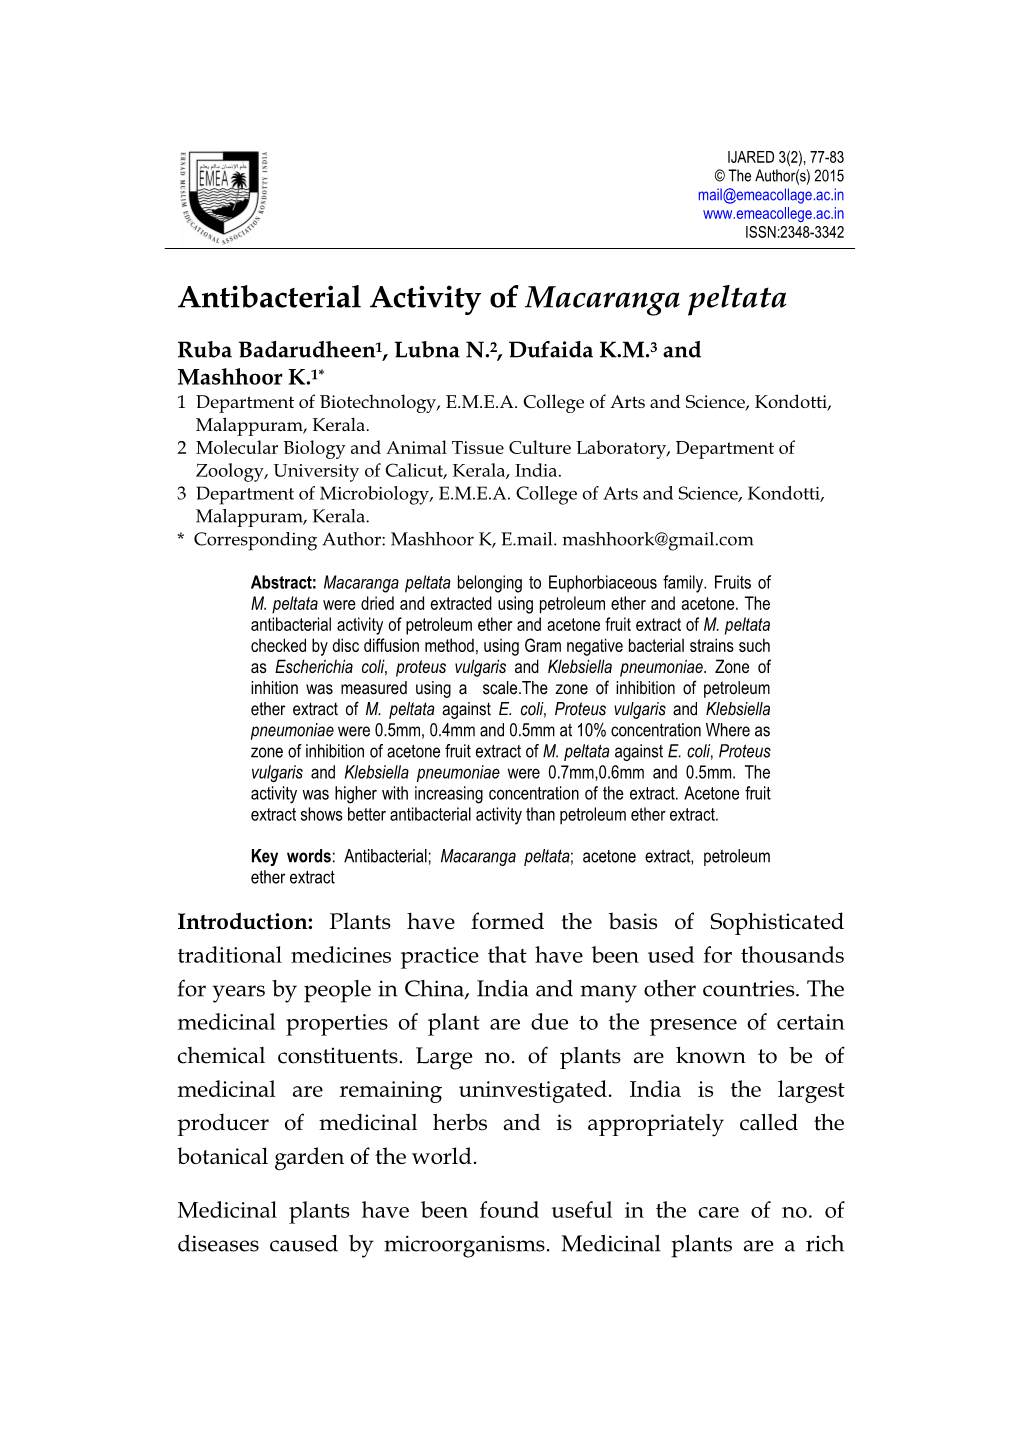 Antibacterial Activity of Macaranga Peltata